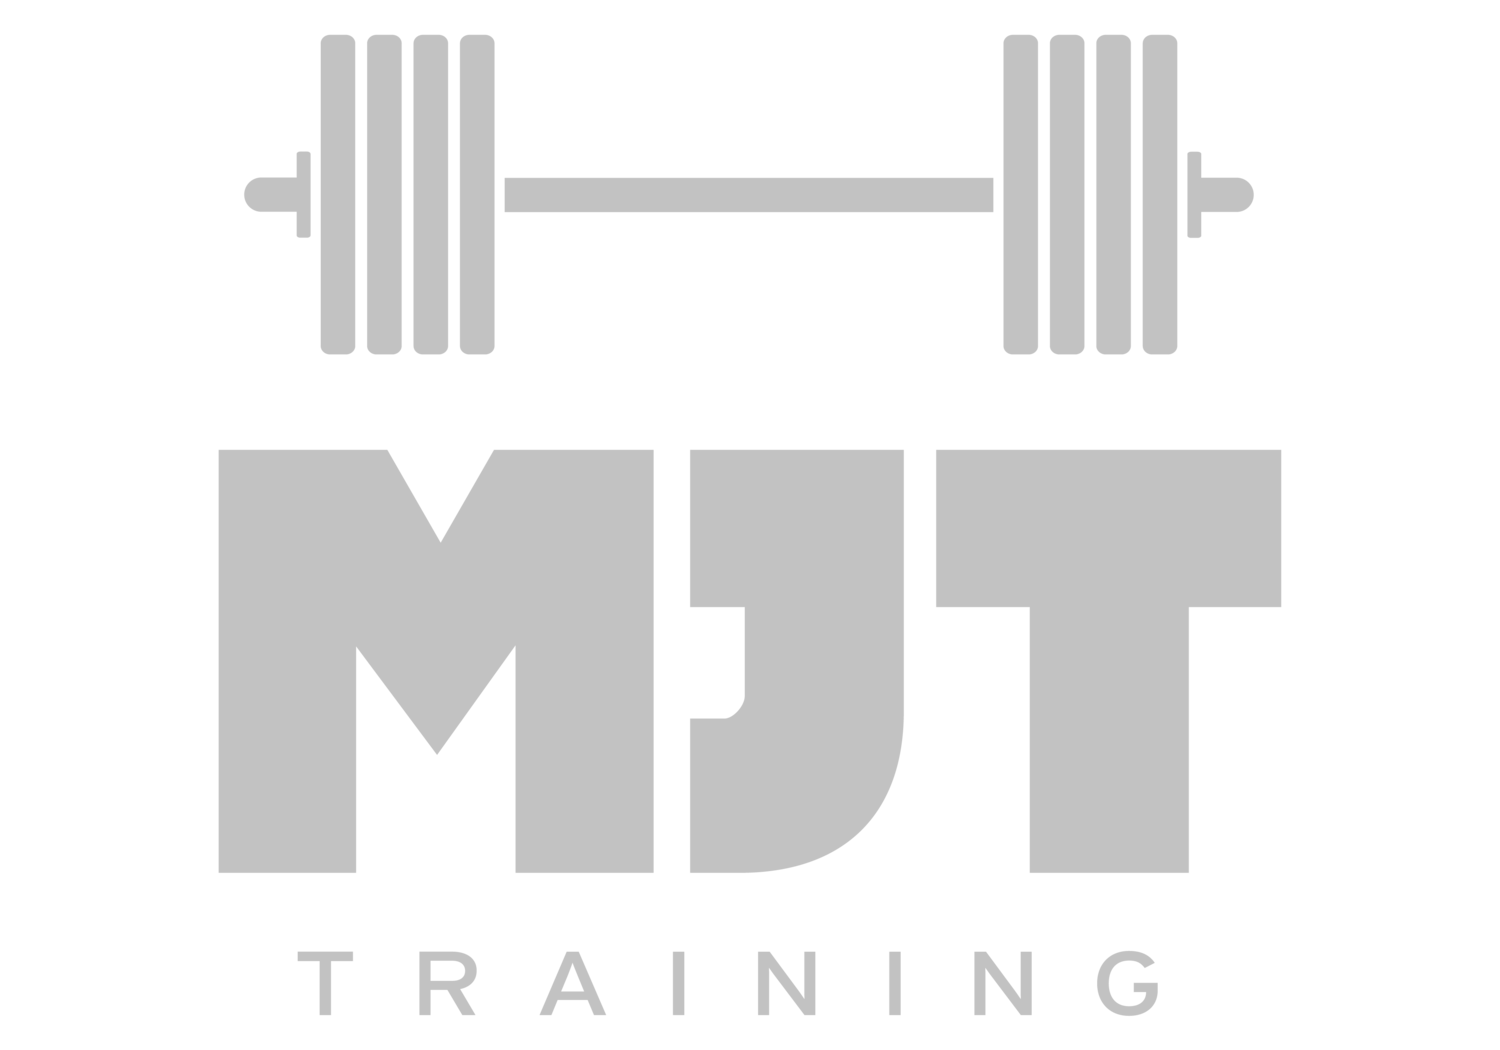 MJT Training